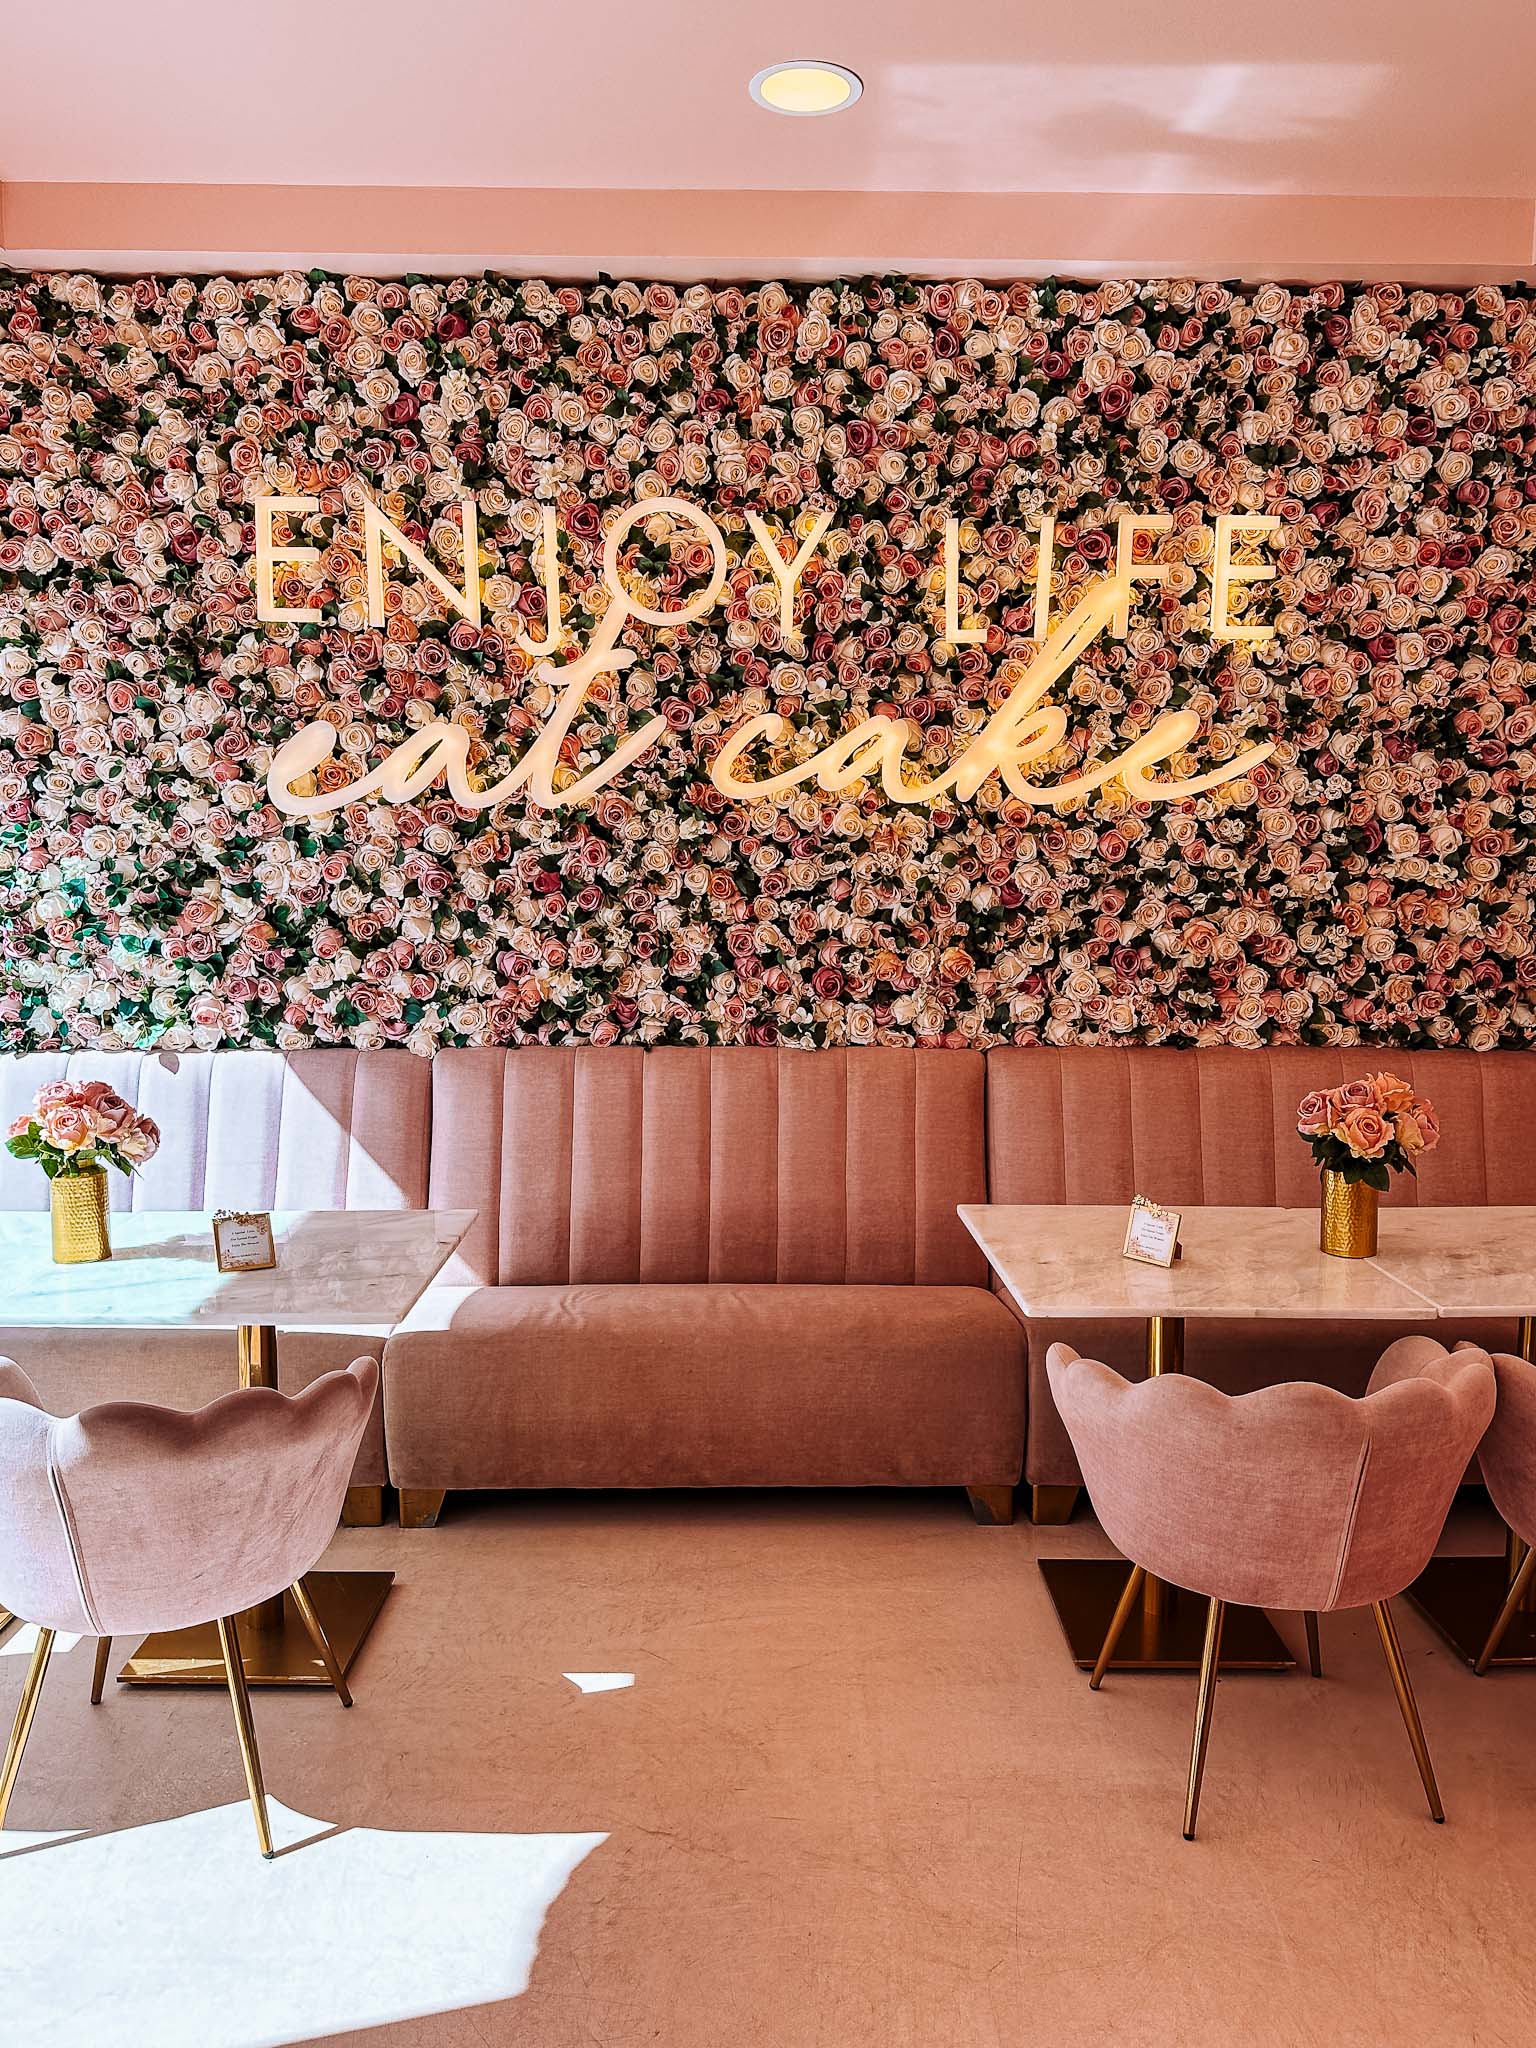 Best Instagram spots in Aveiro, Portugal - M Bakery Aveiro